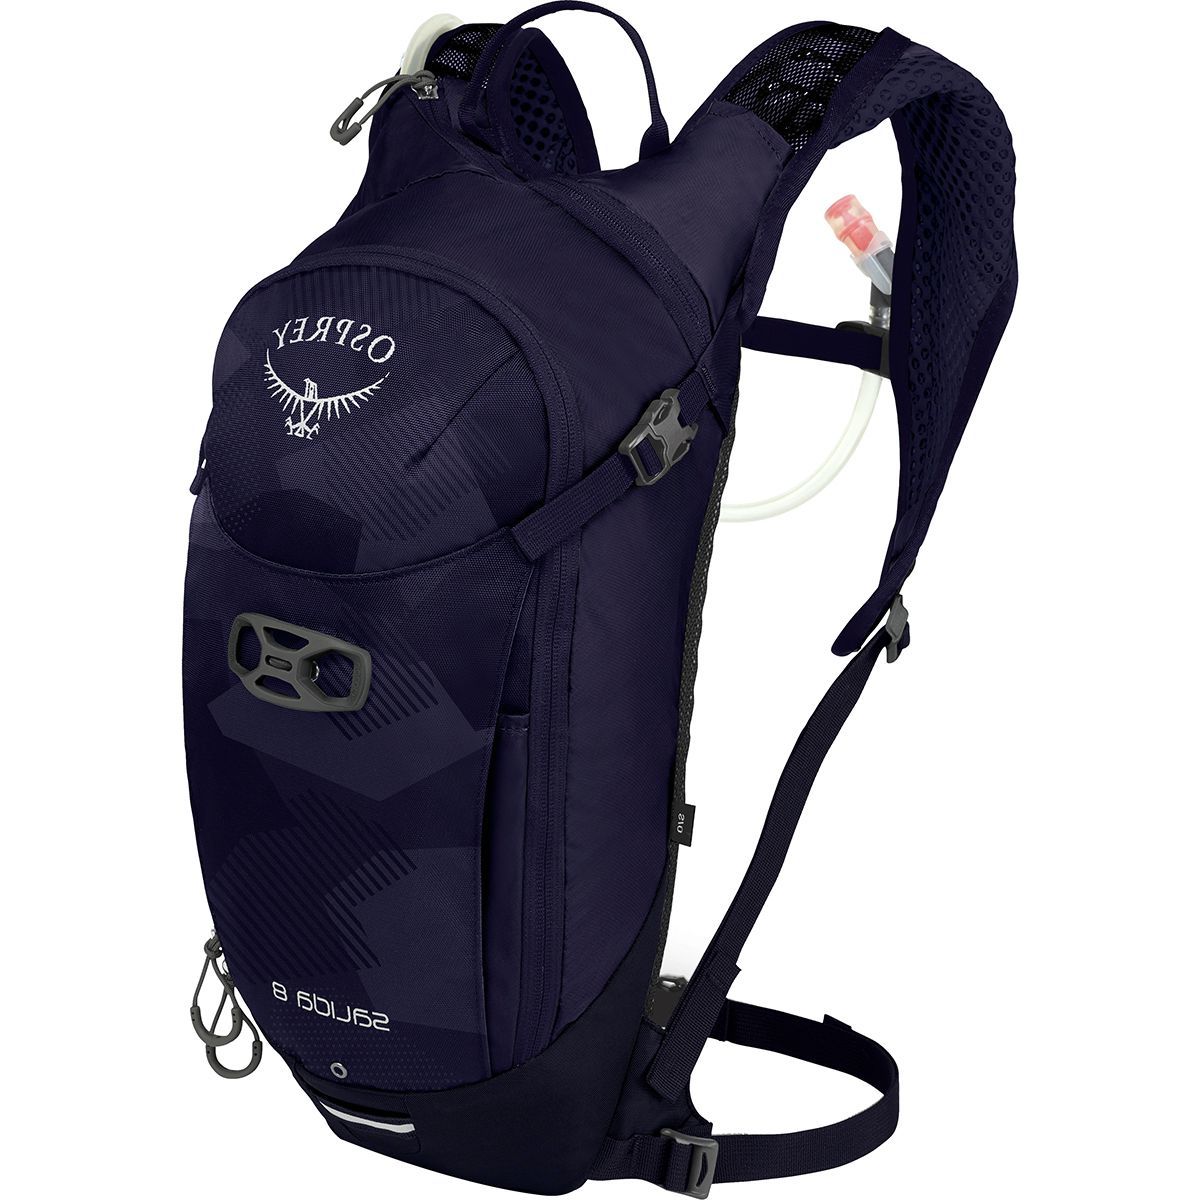 Osprey Packs Salida 8L Backpack - Women's